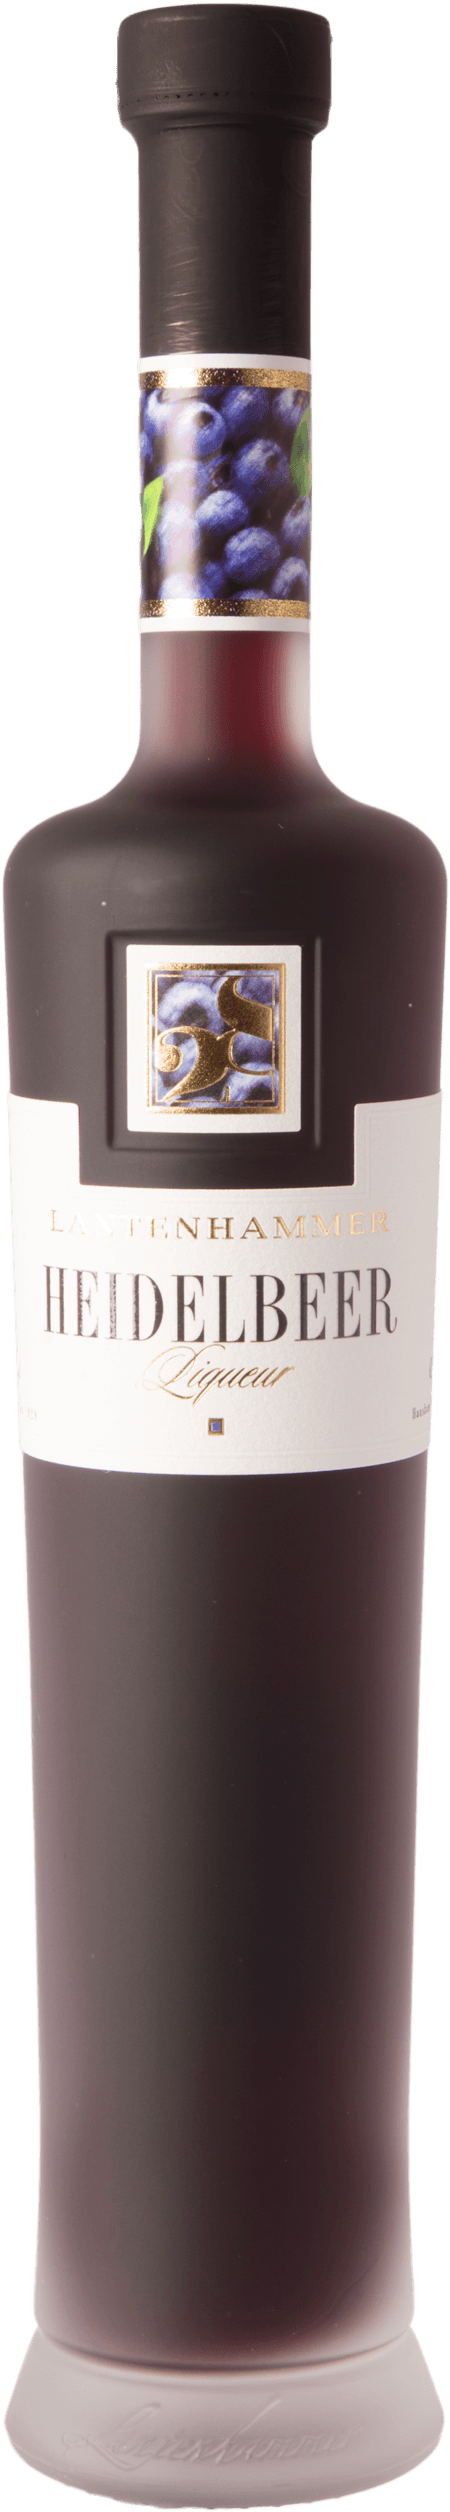 lantenhammer-heidelbeer-liqueur-25-prozent-shop